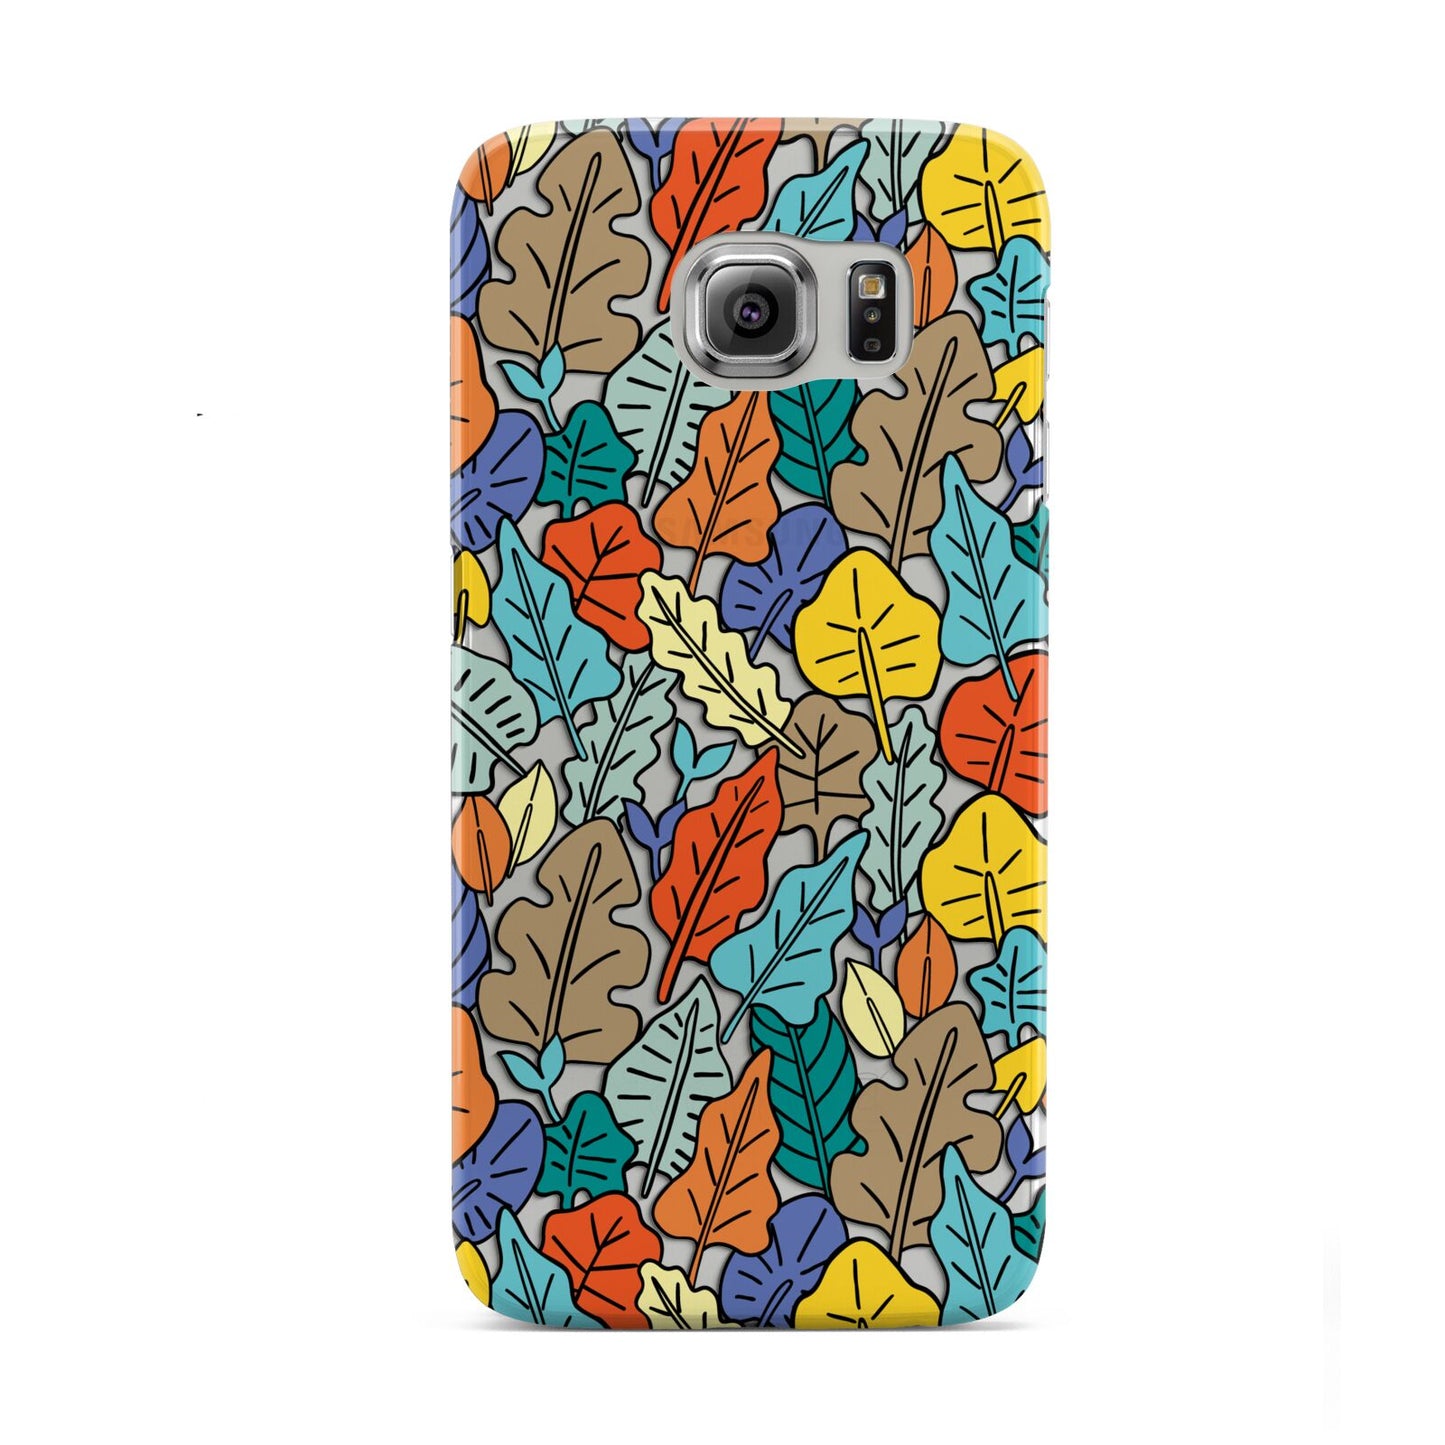 Autumn Leaves Samsung Galaxy S6 Case